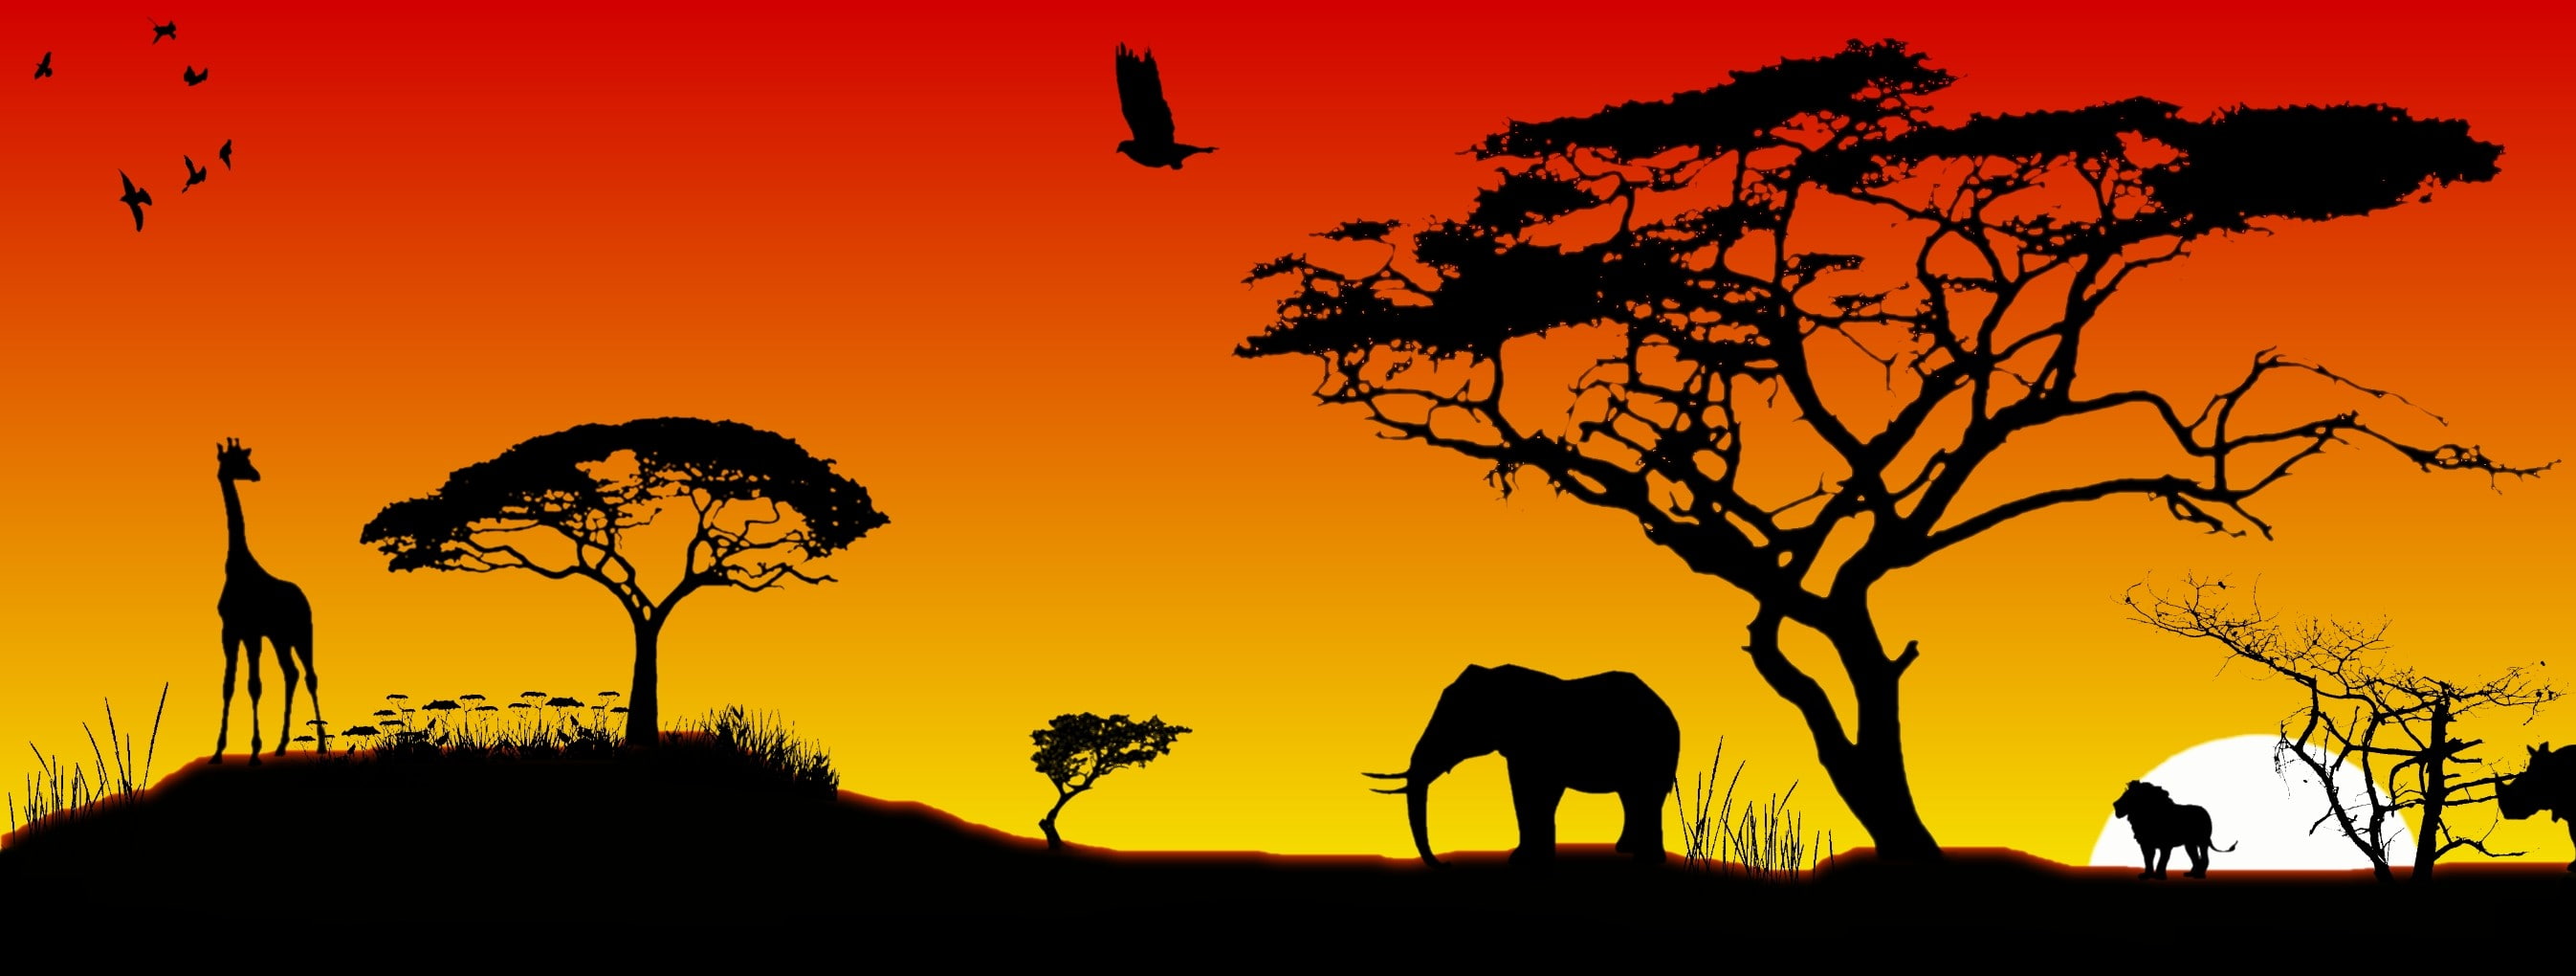 Africa, animals, silhouette, sunset, tree, sky, mammal, nature